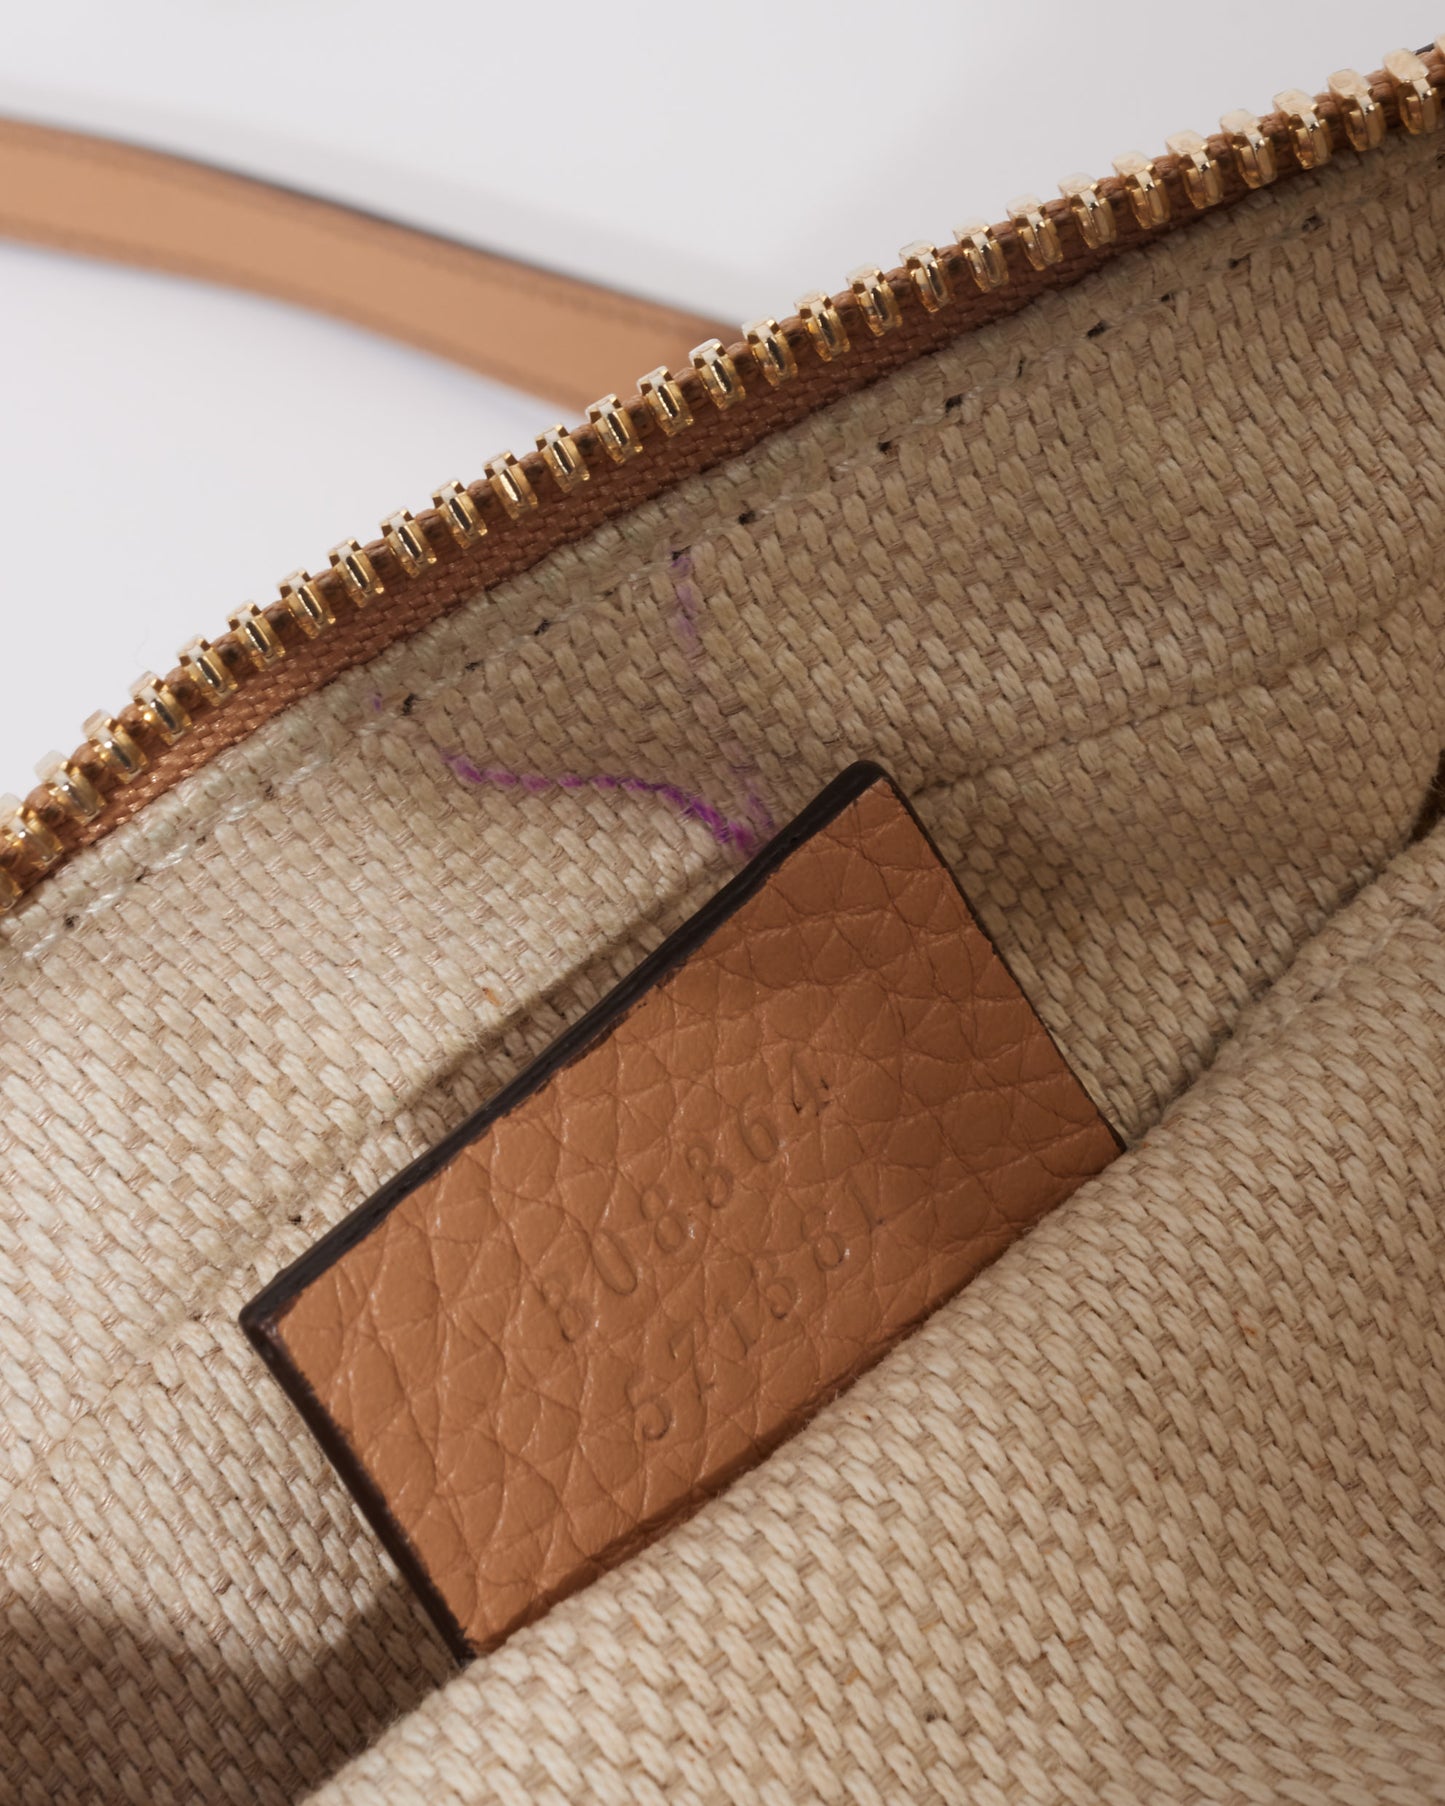 Gucci Beige Leather Embossed Logo Soho Disco Crossbody Bag